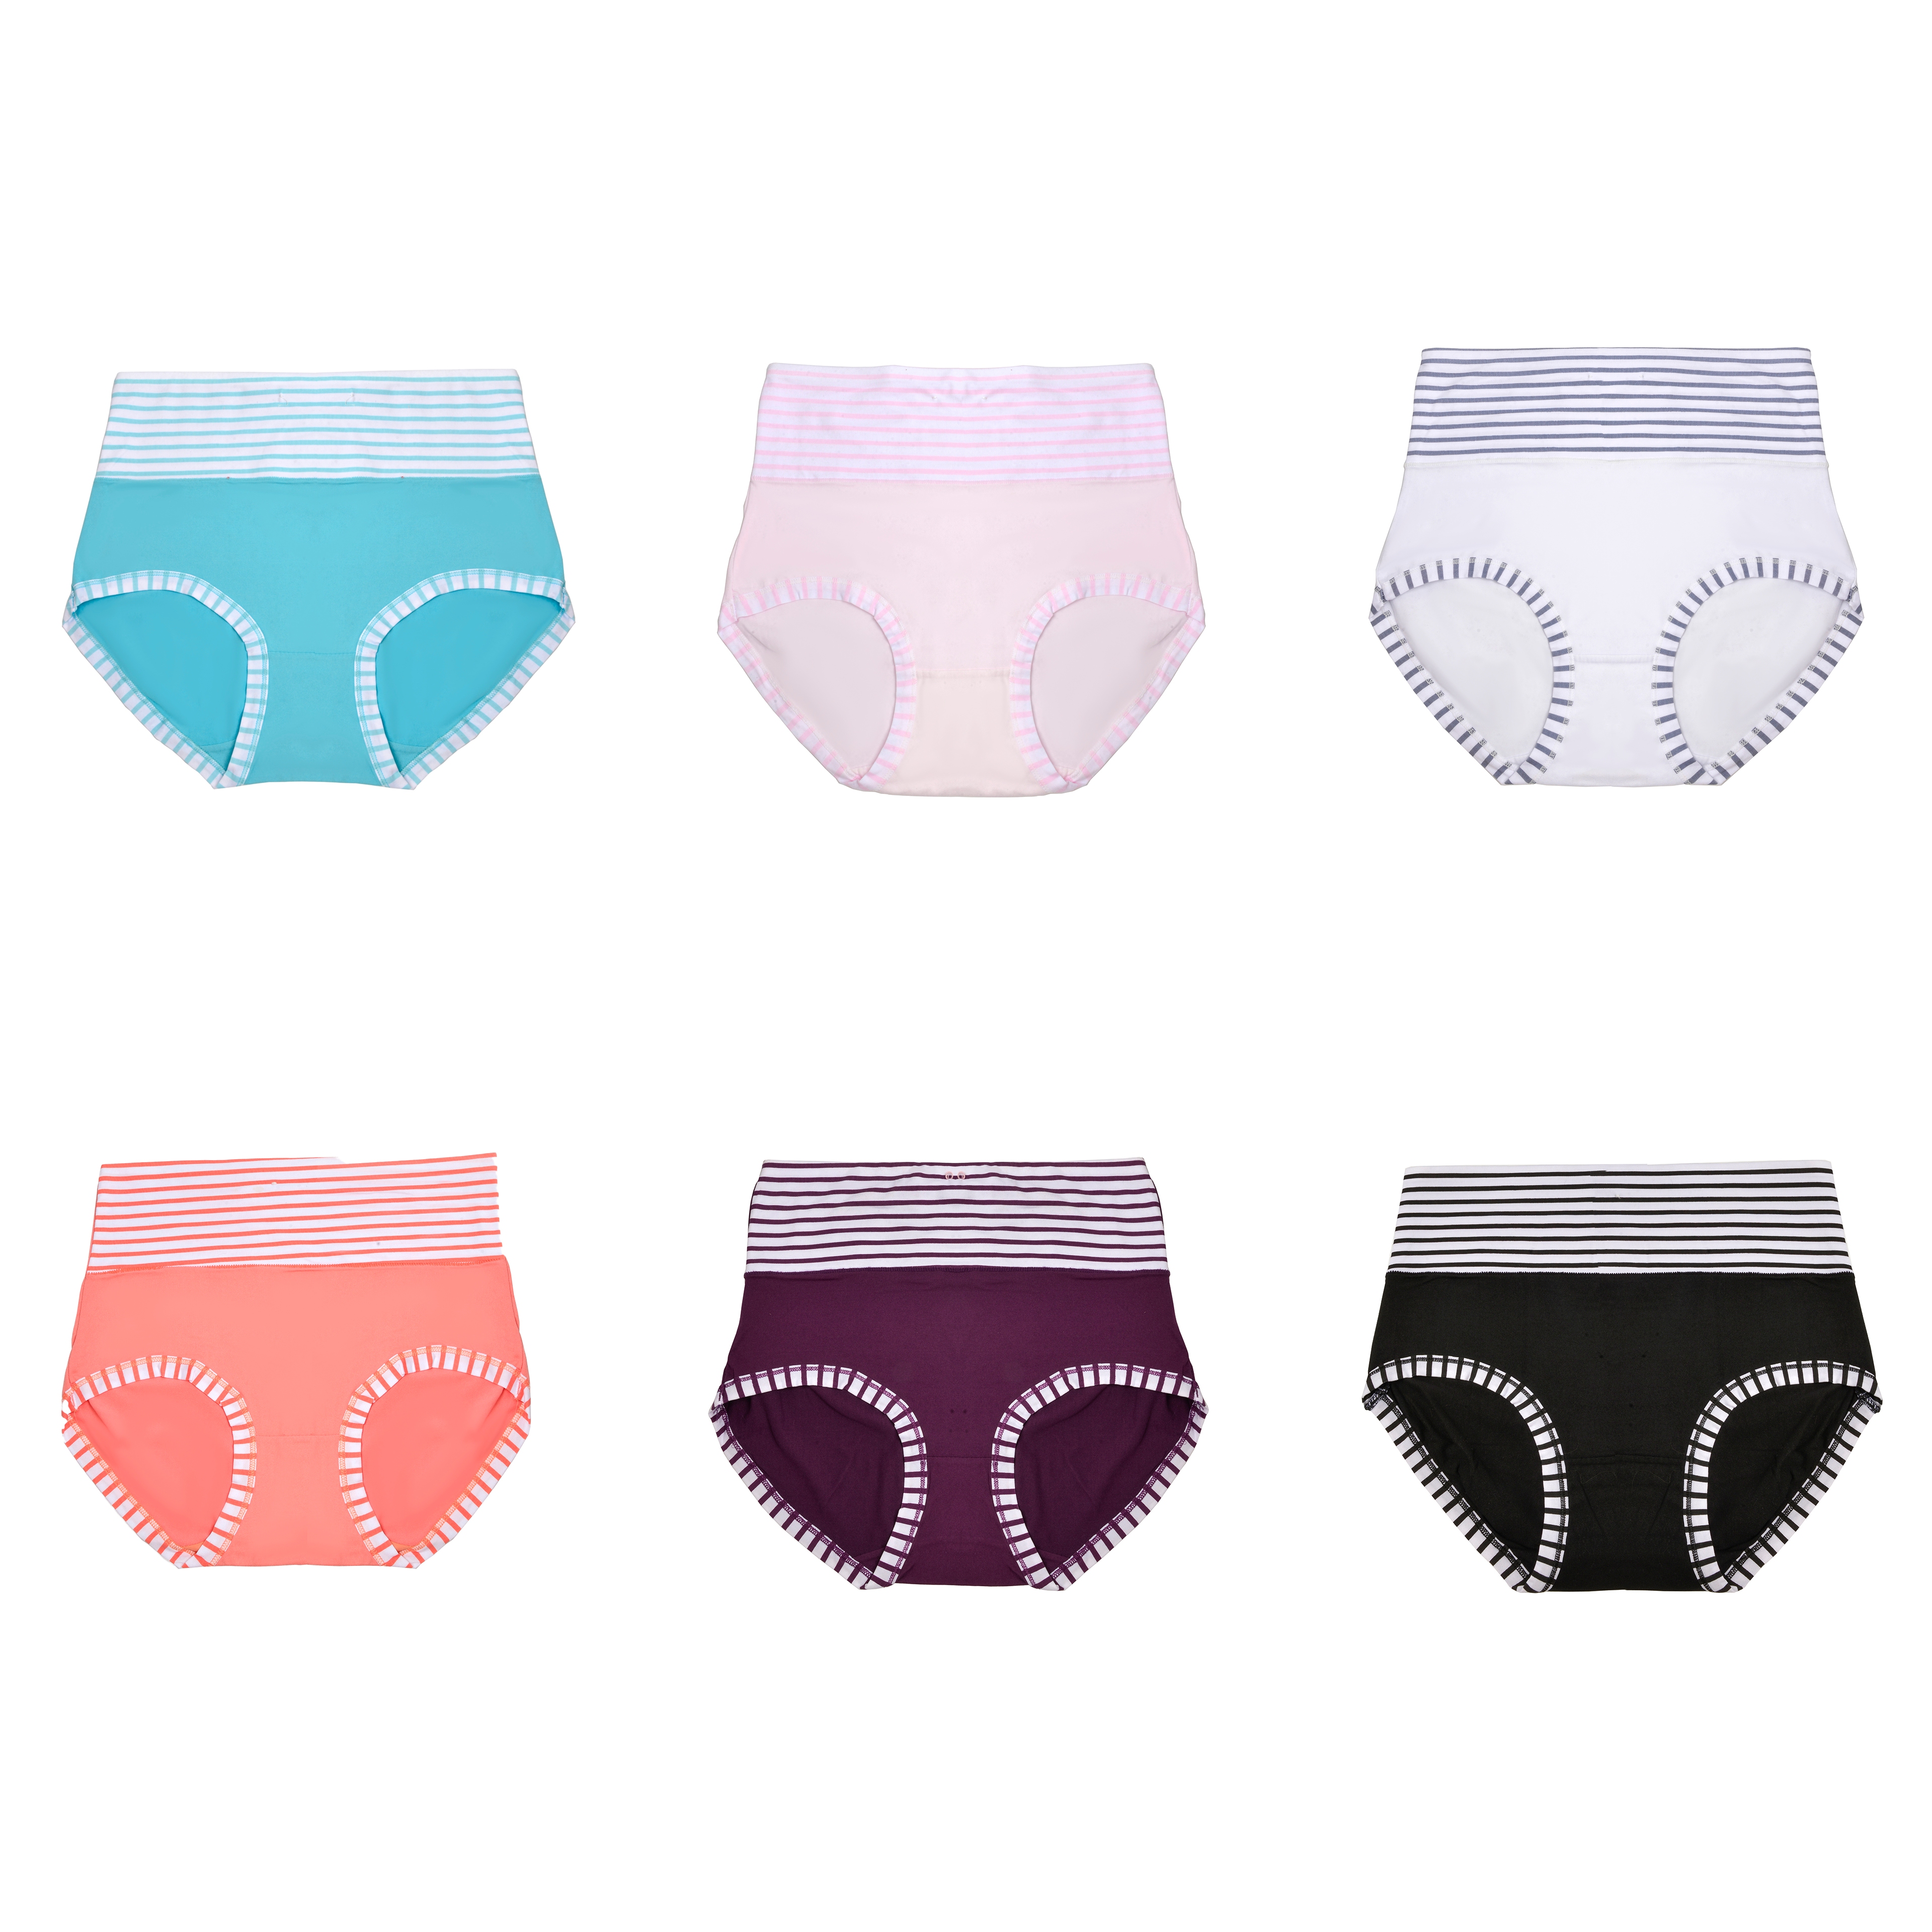 foreign trade women‘s pants export underwear women‘s safety women‘s boxers milk silk underwear hot selling underwear popular 10